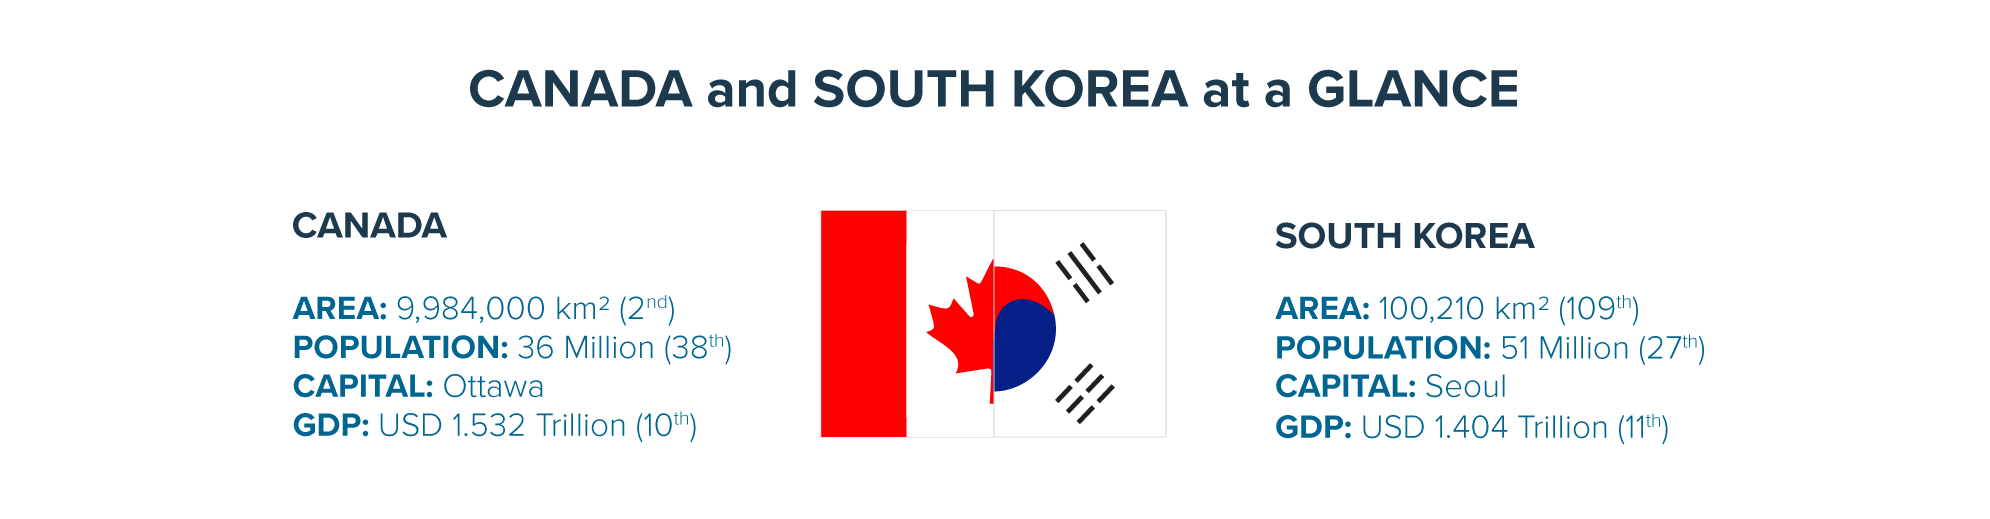 Canada-Korea Free Trade Agreement (CKFTA) promotes trade relationships between Canada and Korea | Vancouver Economic Commission